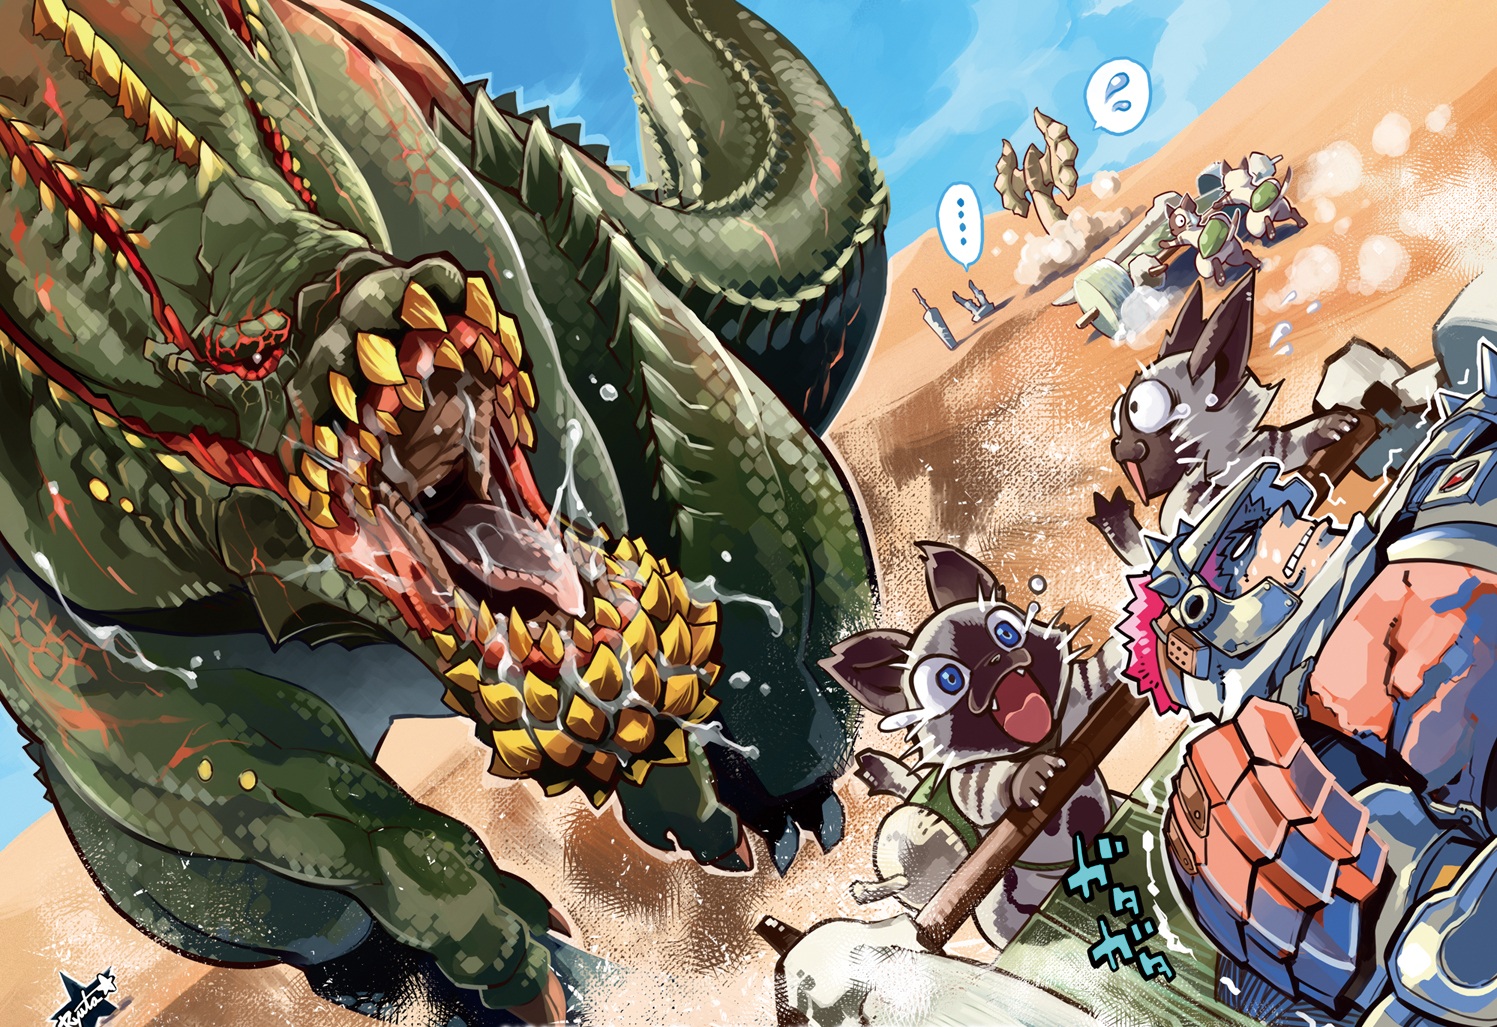 A fearsome Deviljho from Monster Hunter on a stunning video game desktop wallpaper.